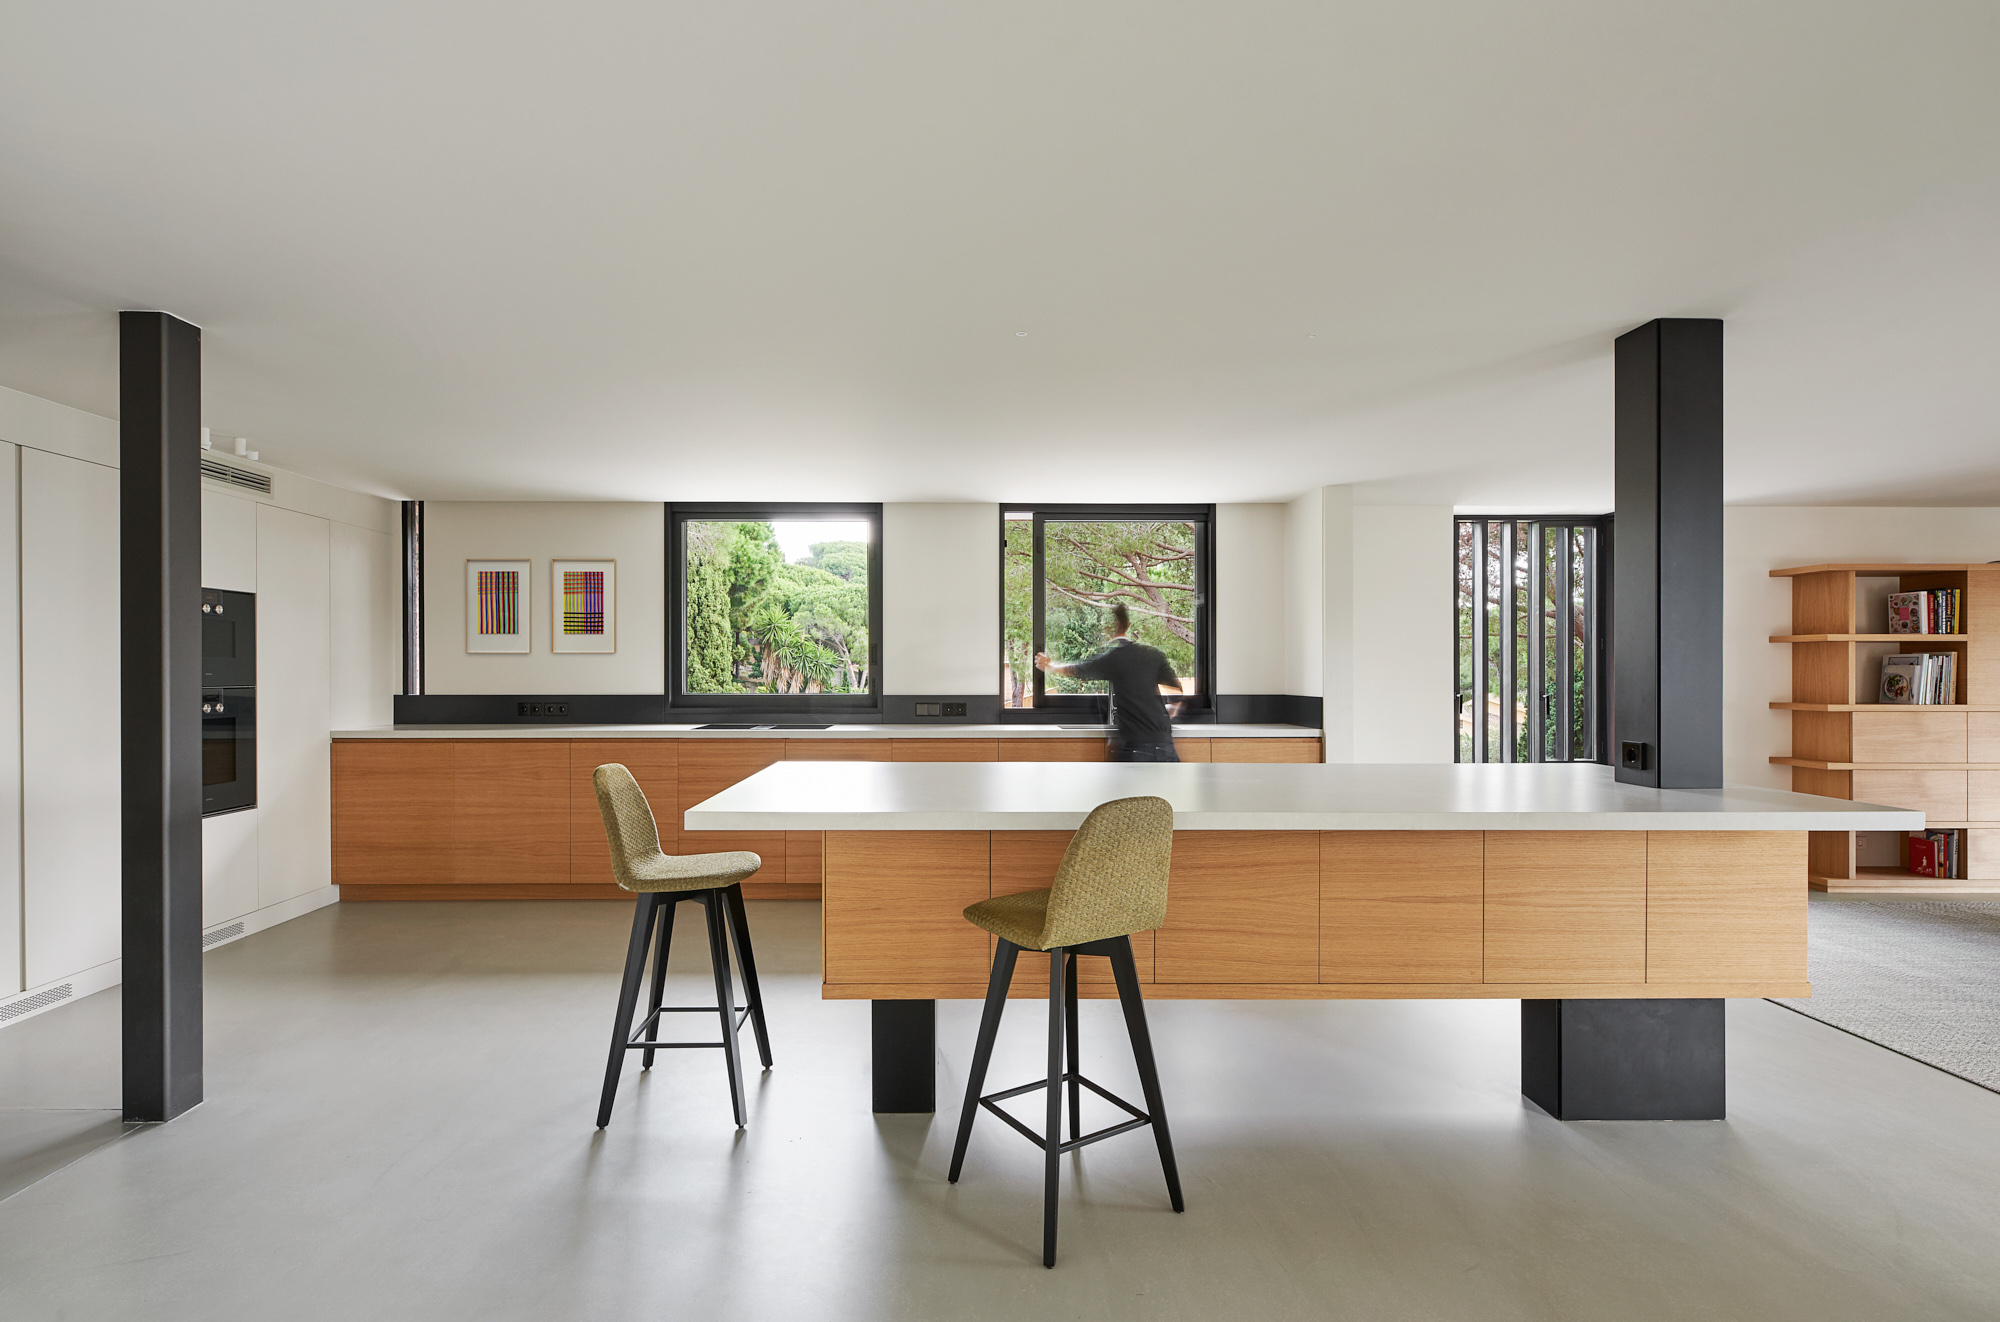 modern kitchen design with floating kitchen island in oak wood